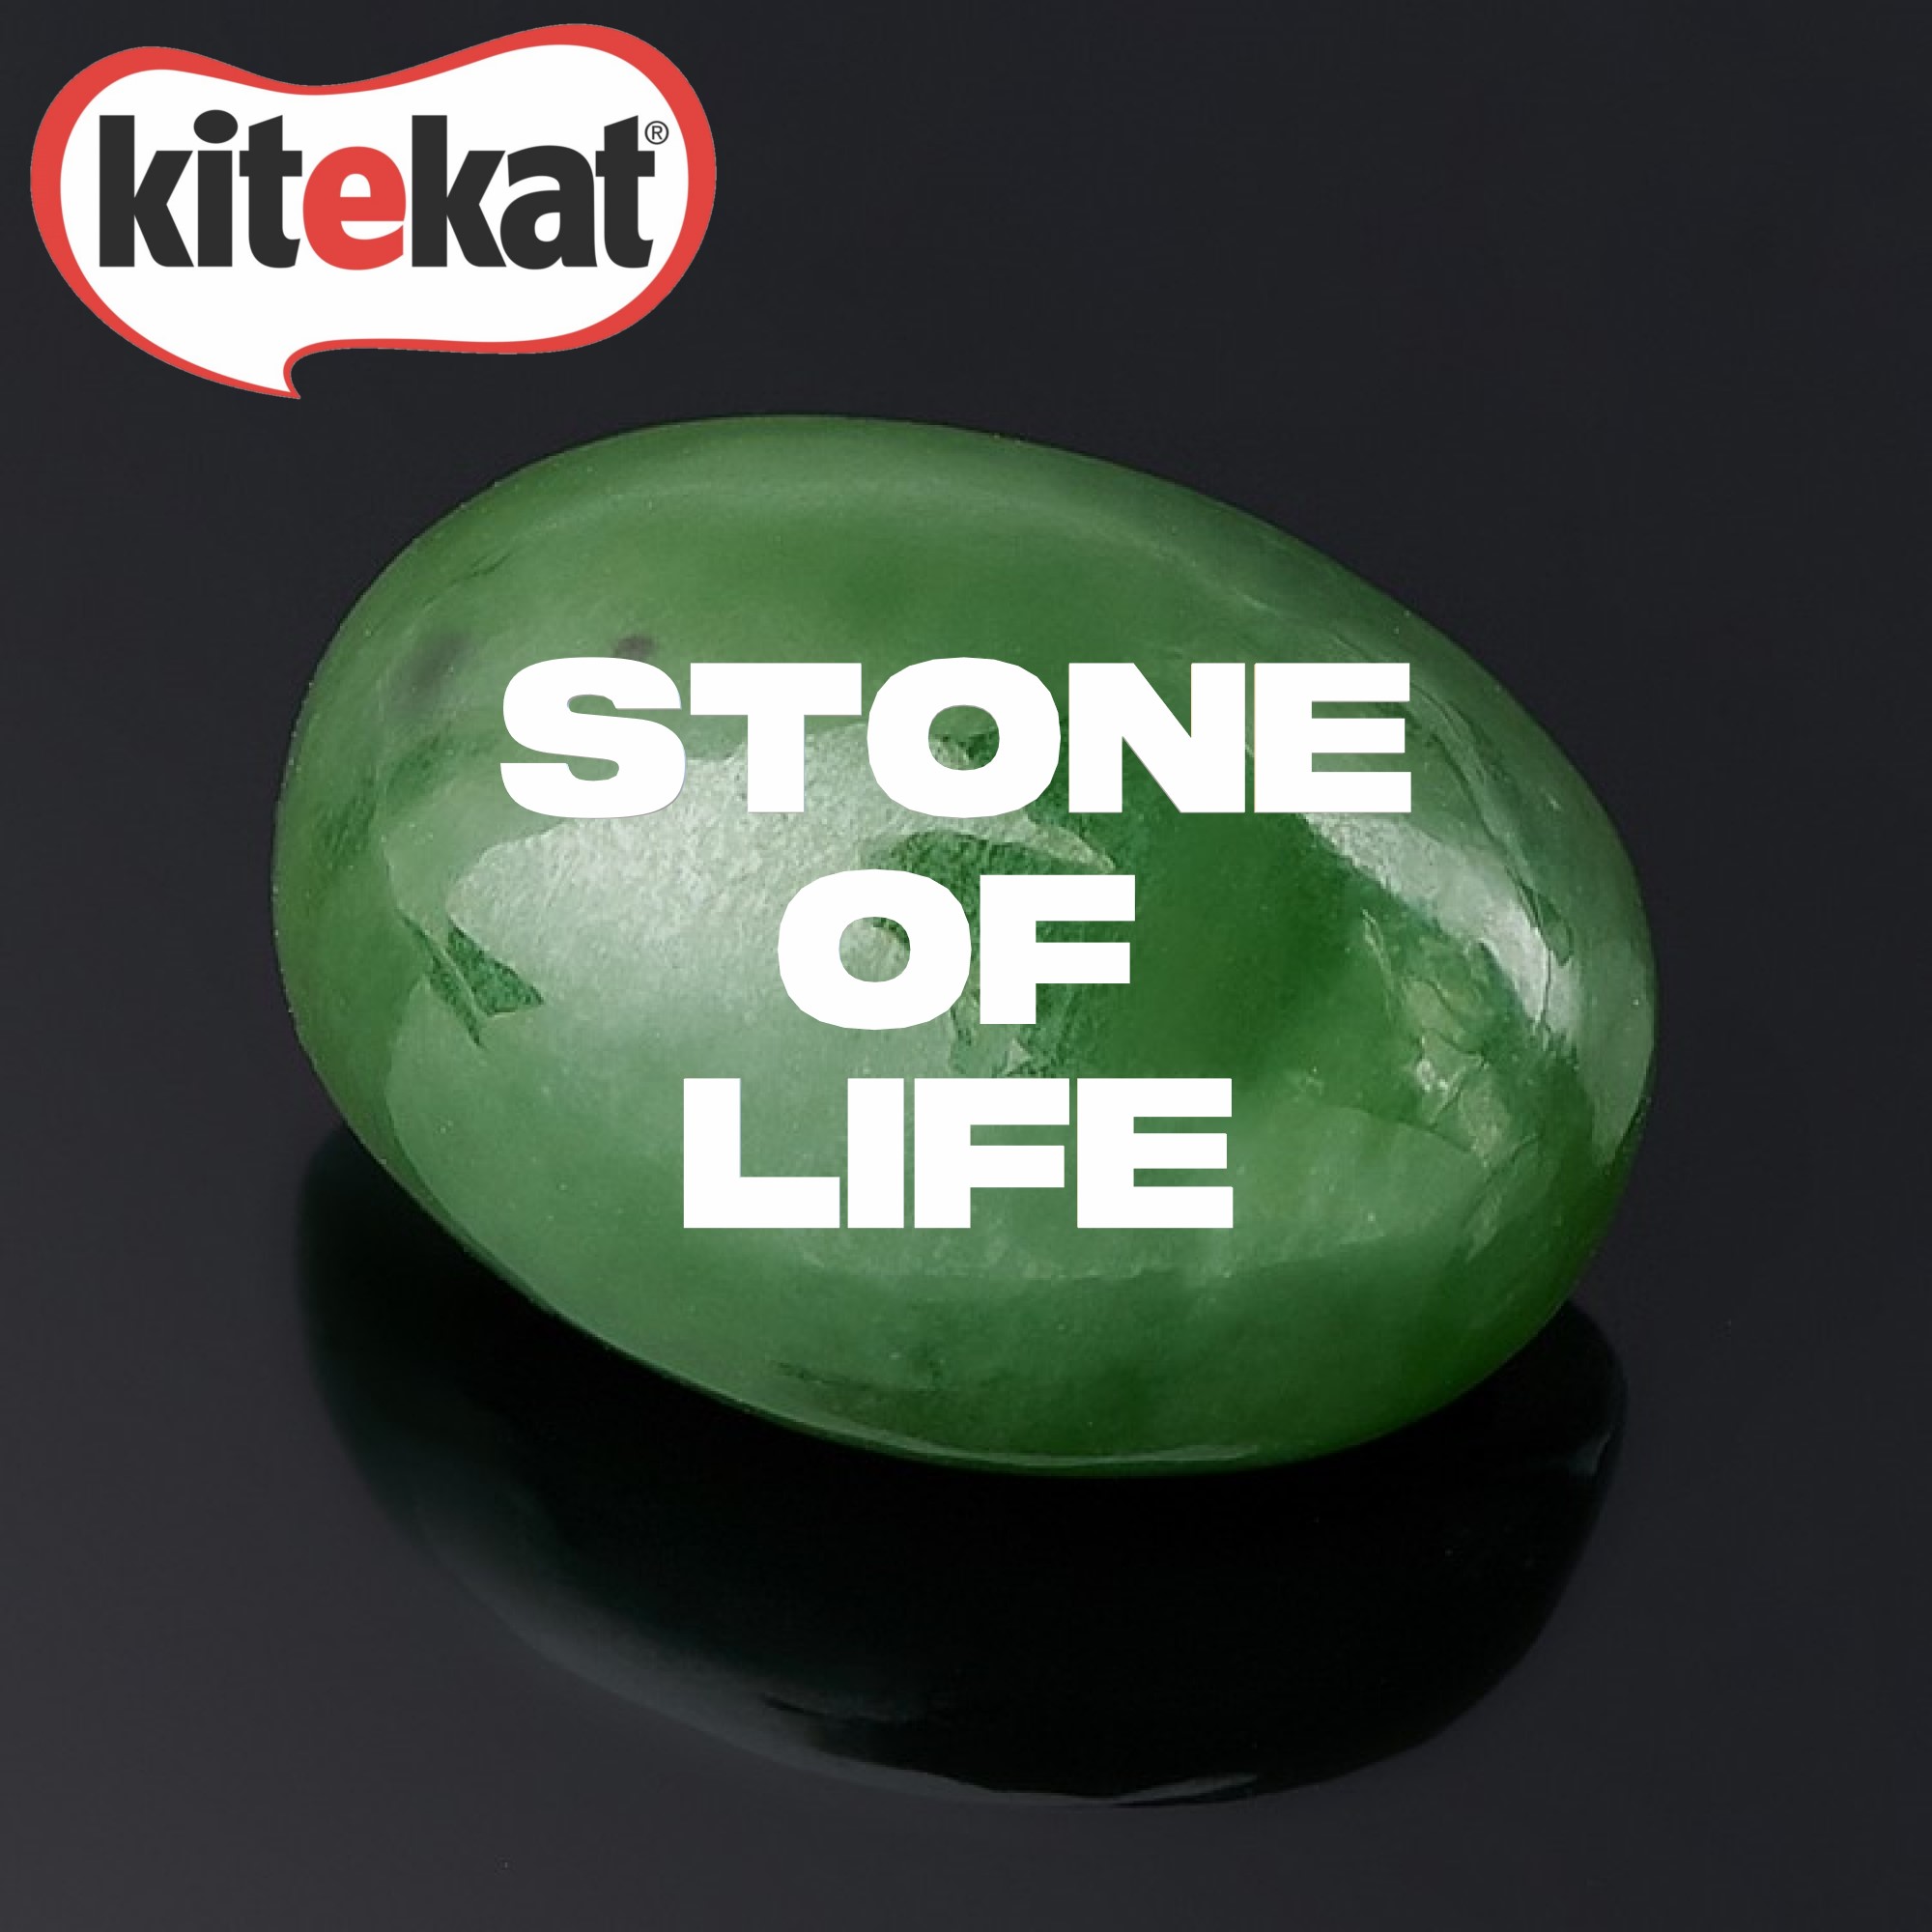 Kitekat Stone Of Life cover artwork